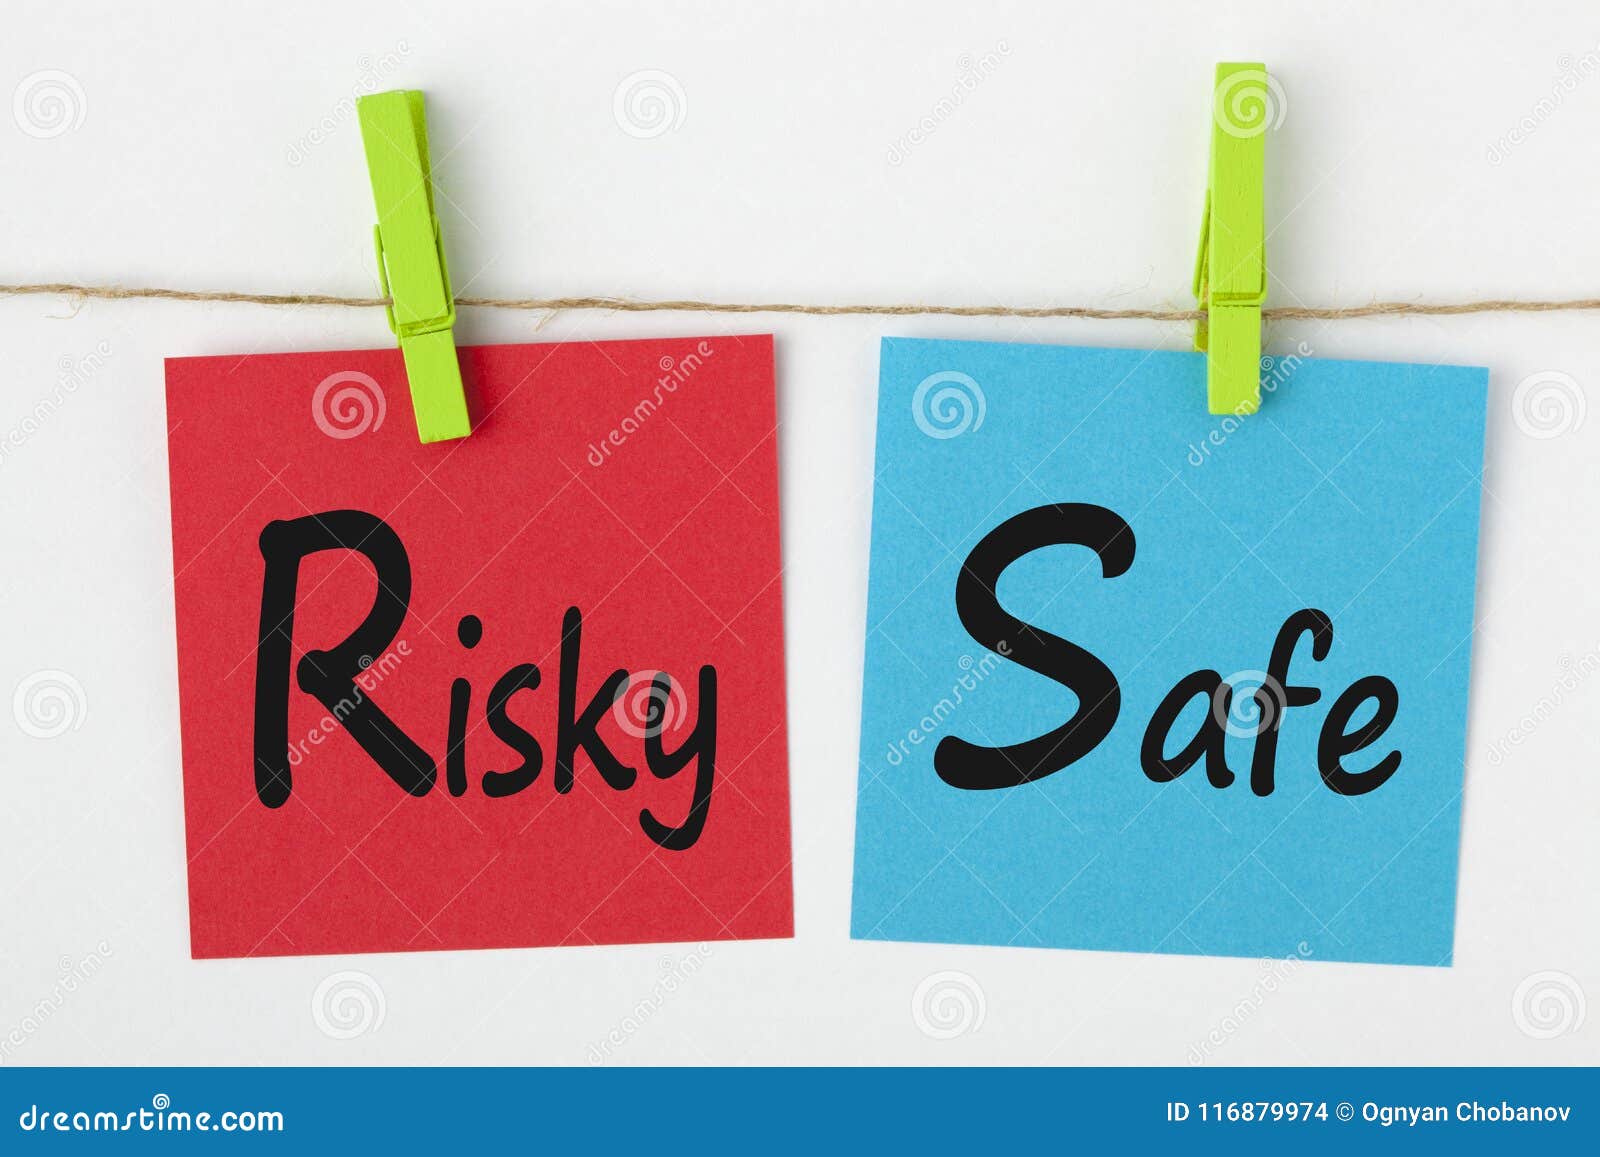 risky or safe concept